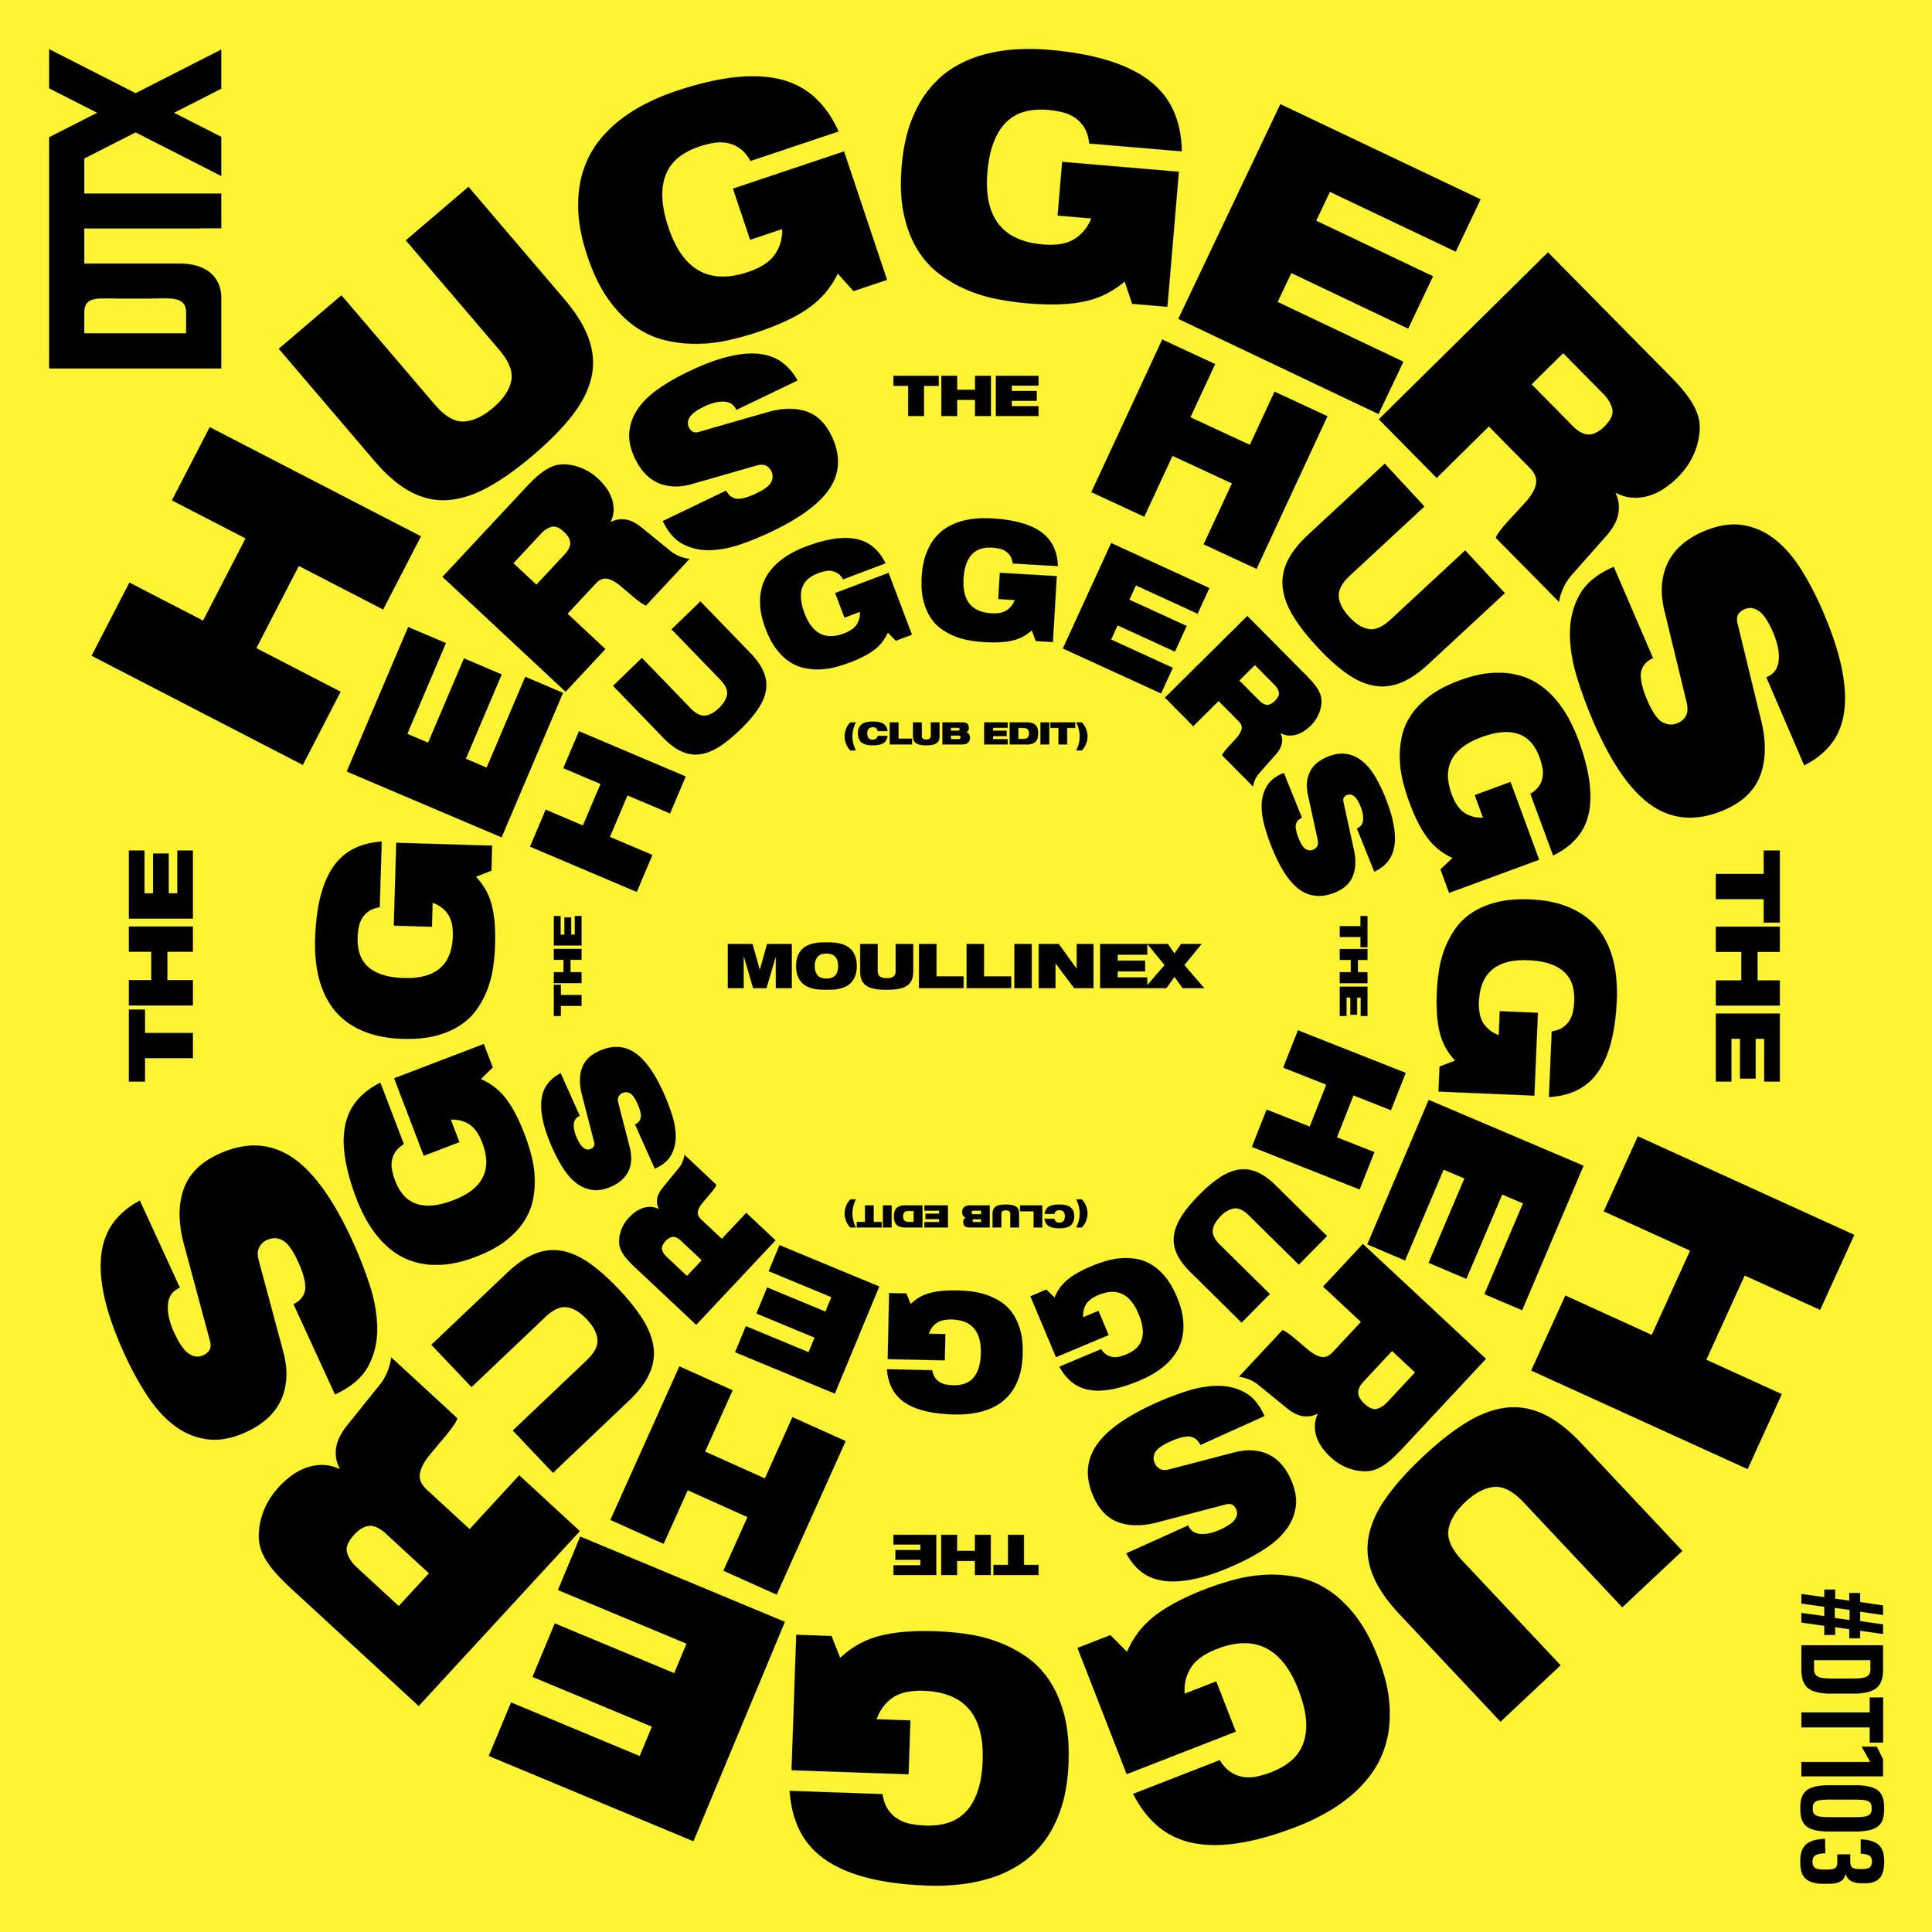 DT103: Moullinex - The Huggers (Club Edit)